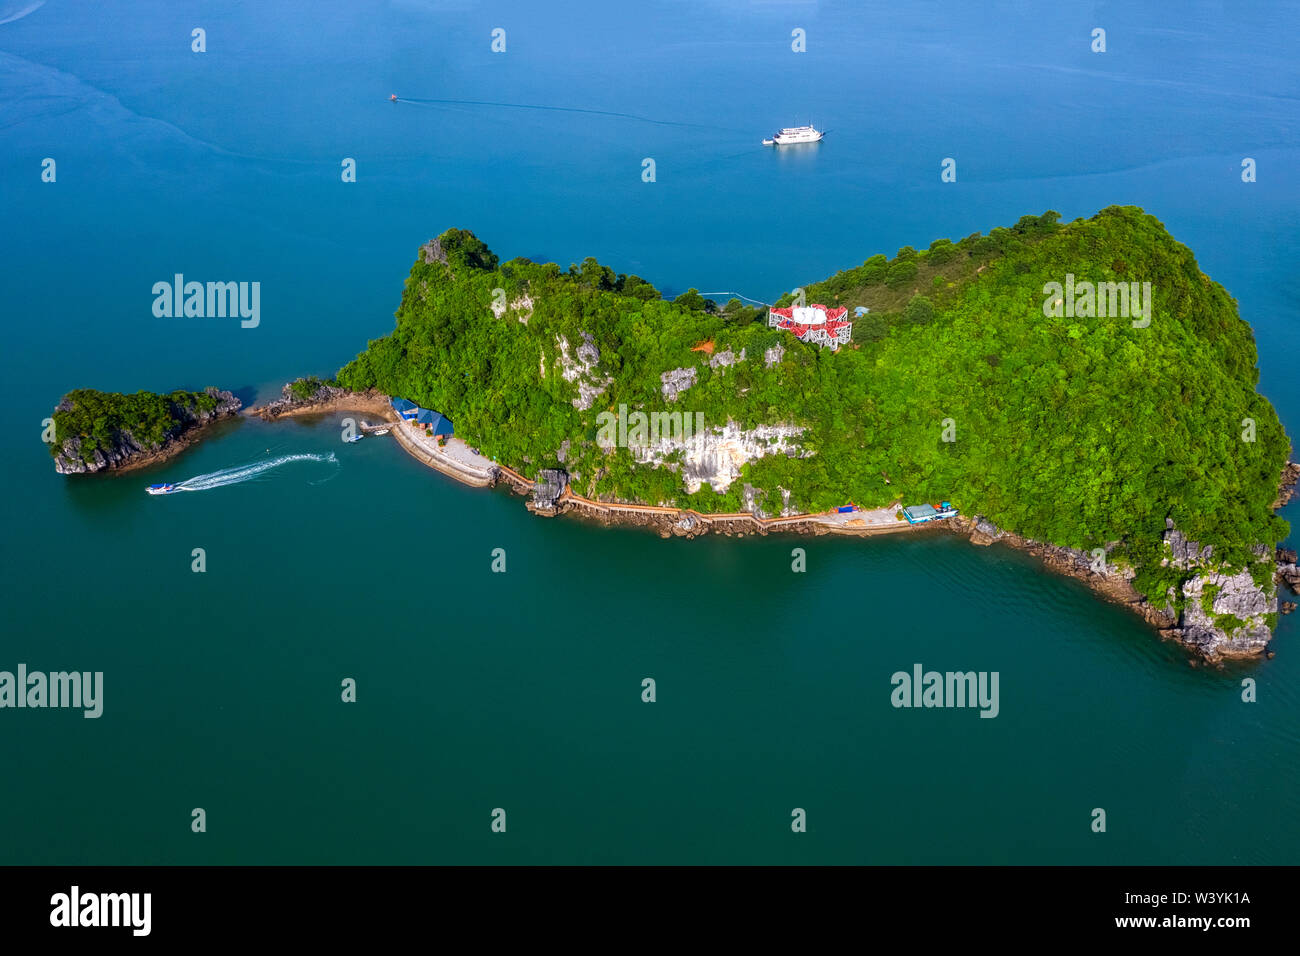 Aerial view of Soi Sim rock island, Halong Bay, Vietnam, Southeast Asia. UNESCO World Heritage Site. Junk boat cruise to Ha Long Bay. Popular landmark Stock Photo